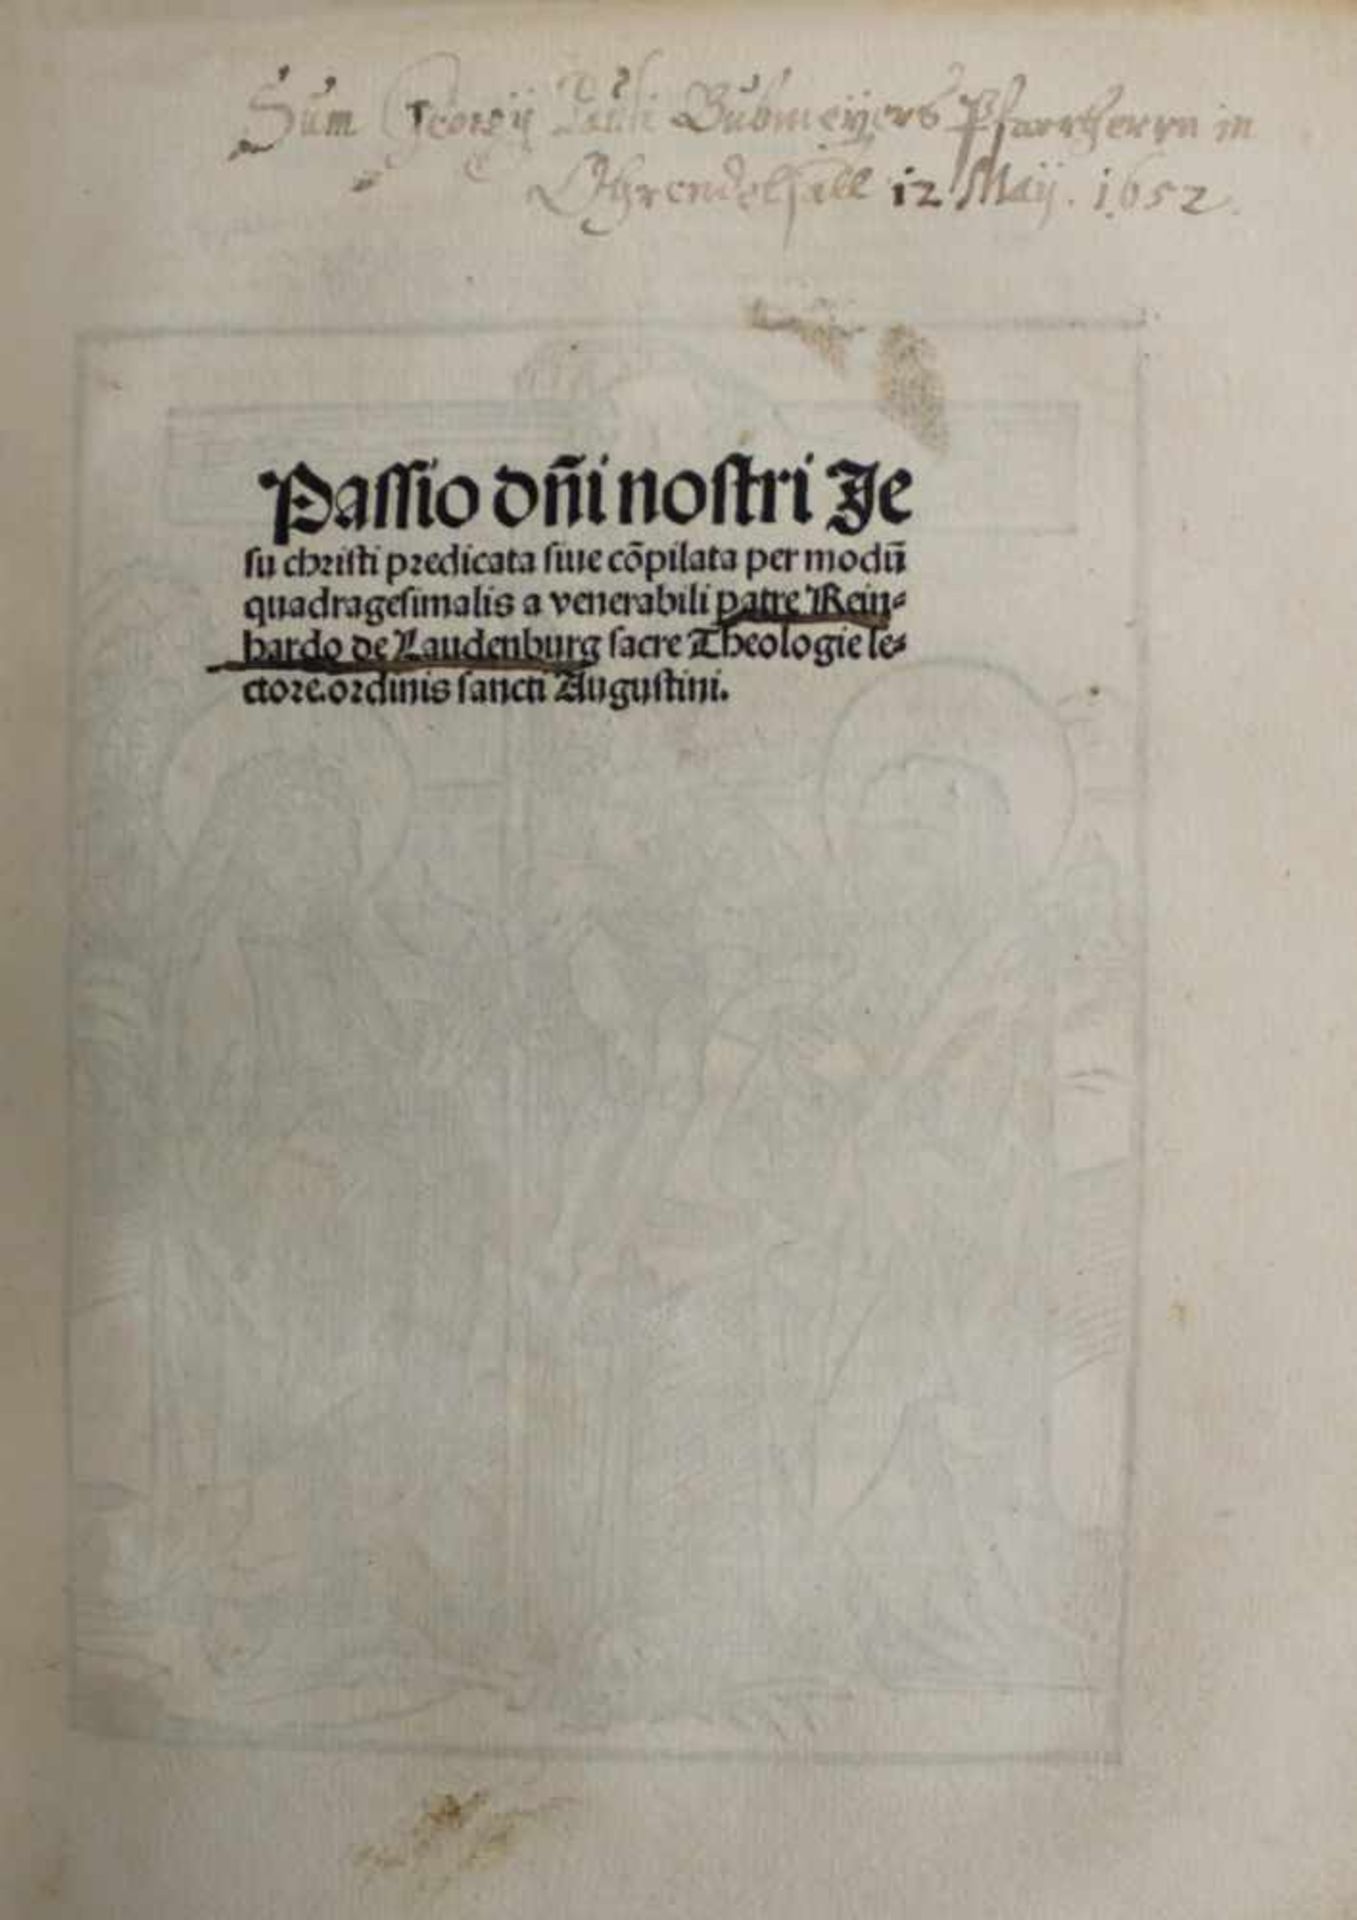 Laudenburg, Reinhard de.Passio d(omi)ni nostri Jesu christi. Nürnberg, (Balth. Schleiffer), 7. IV. - Image 3 of 7